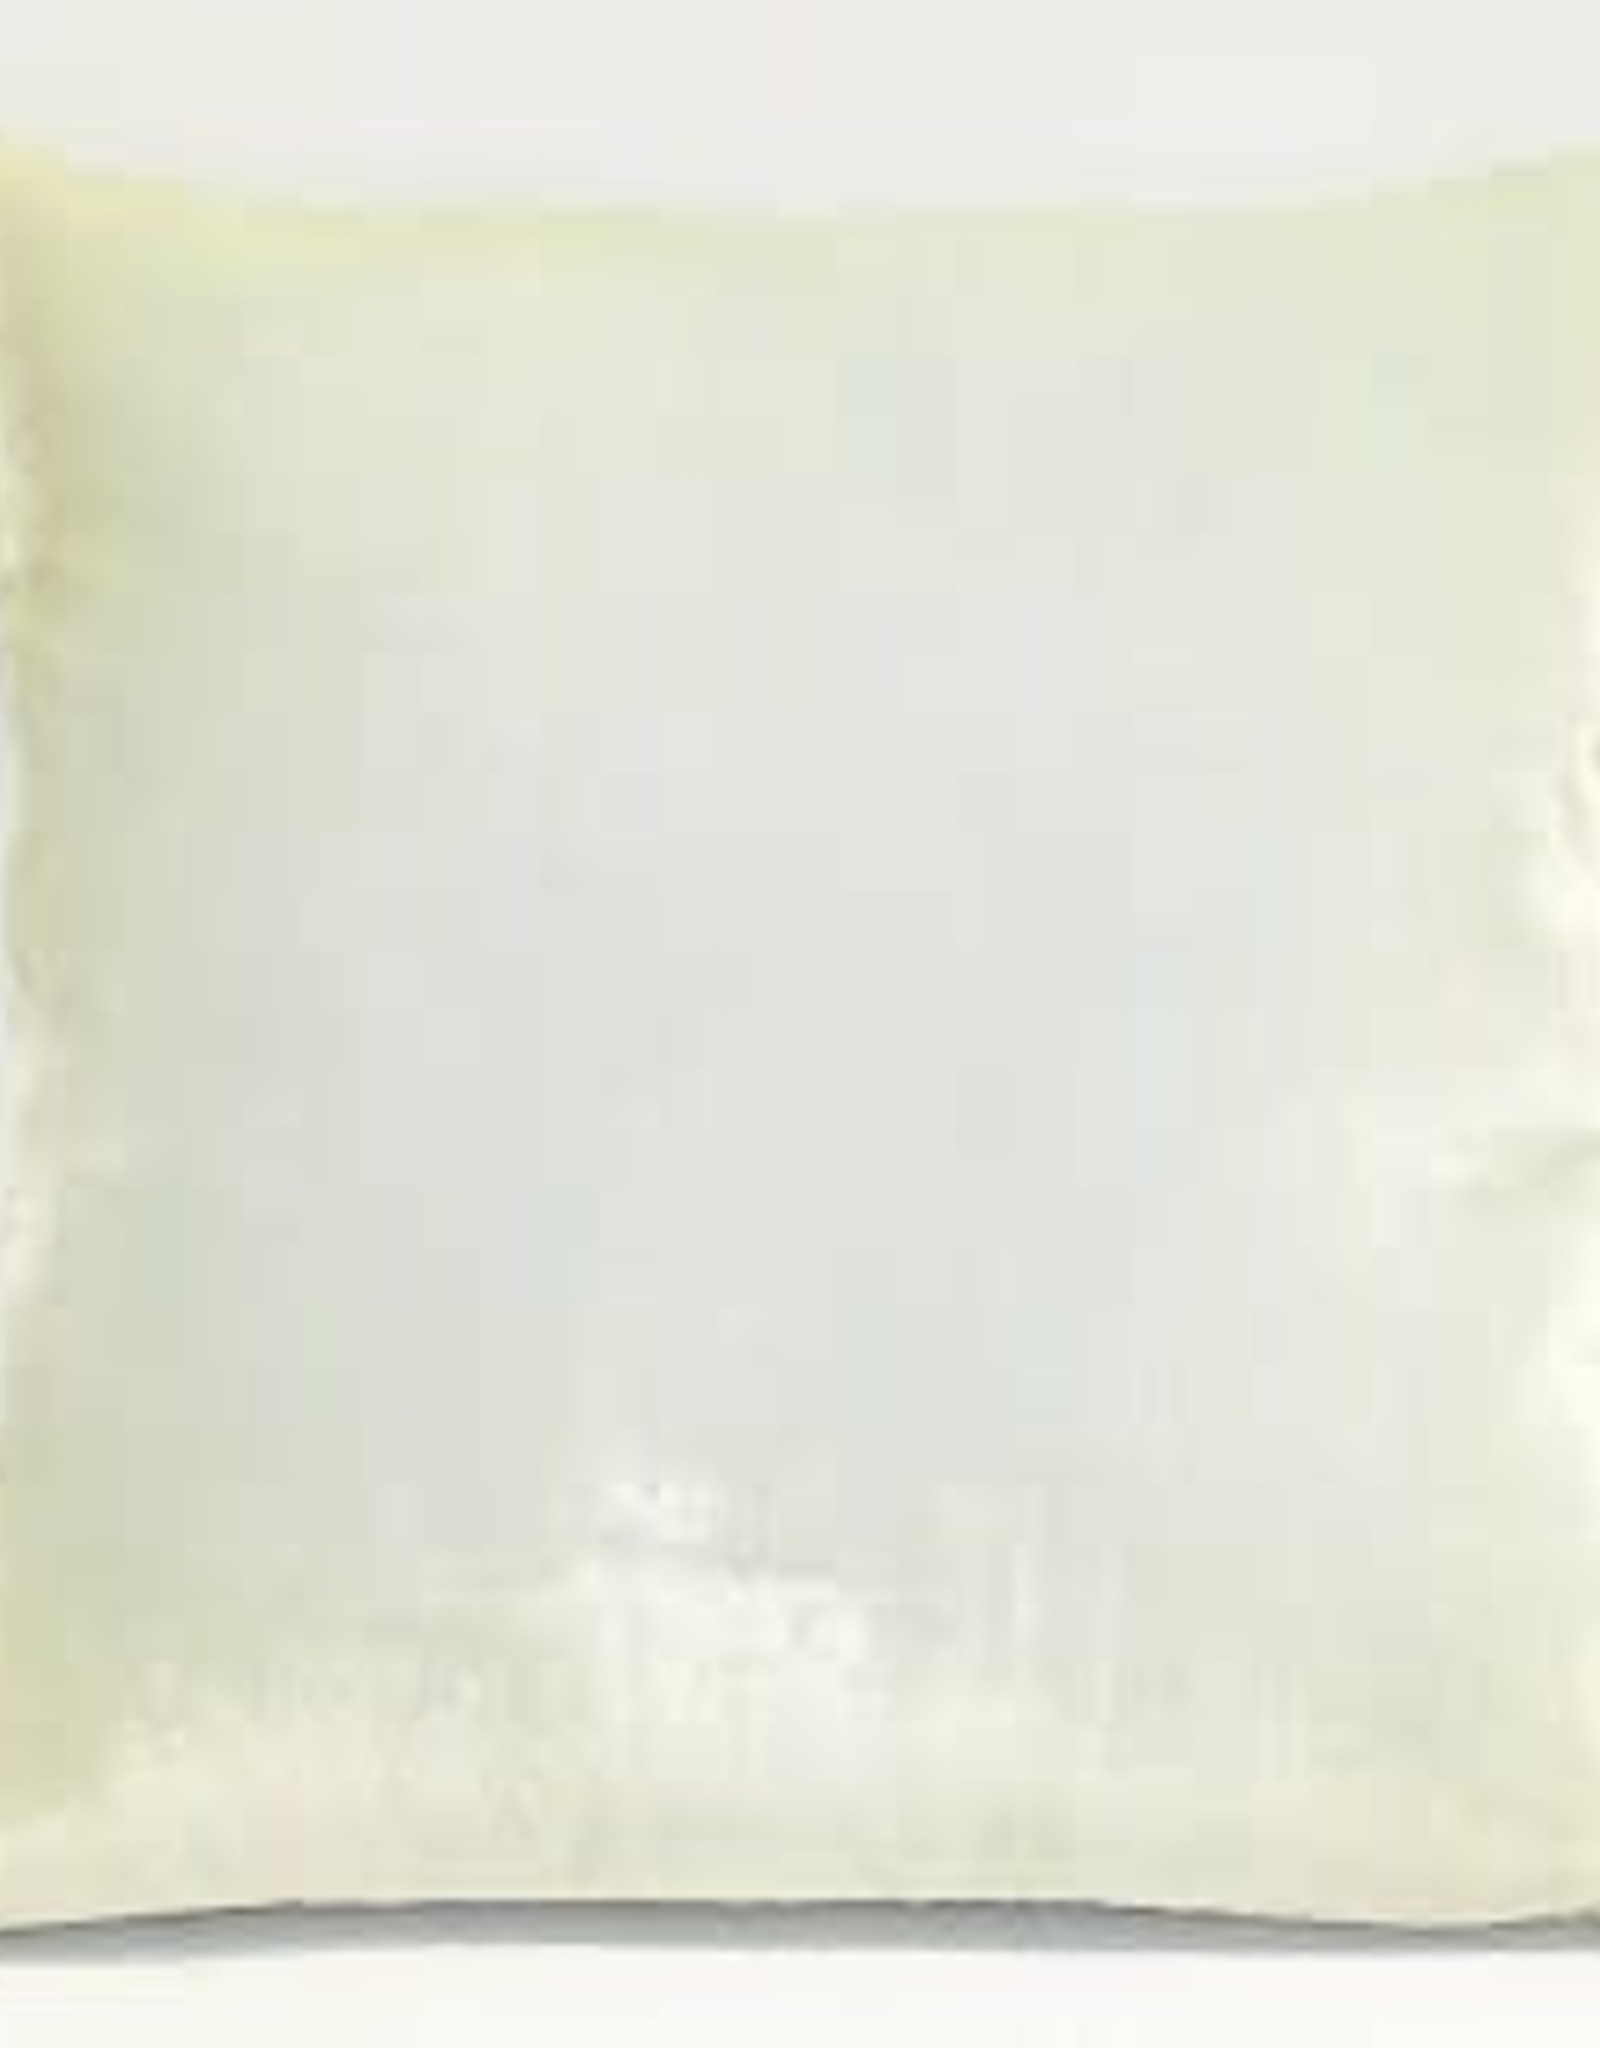 Kevin O'Brien Studio Ombre Silk Velvet Pillow - Ice